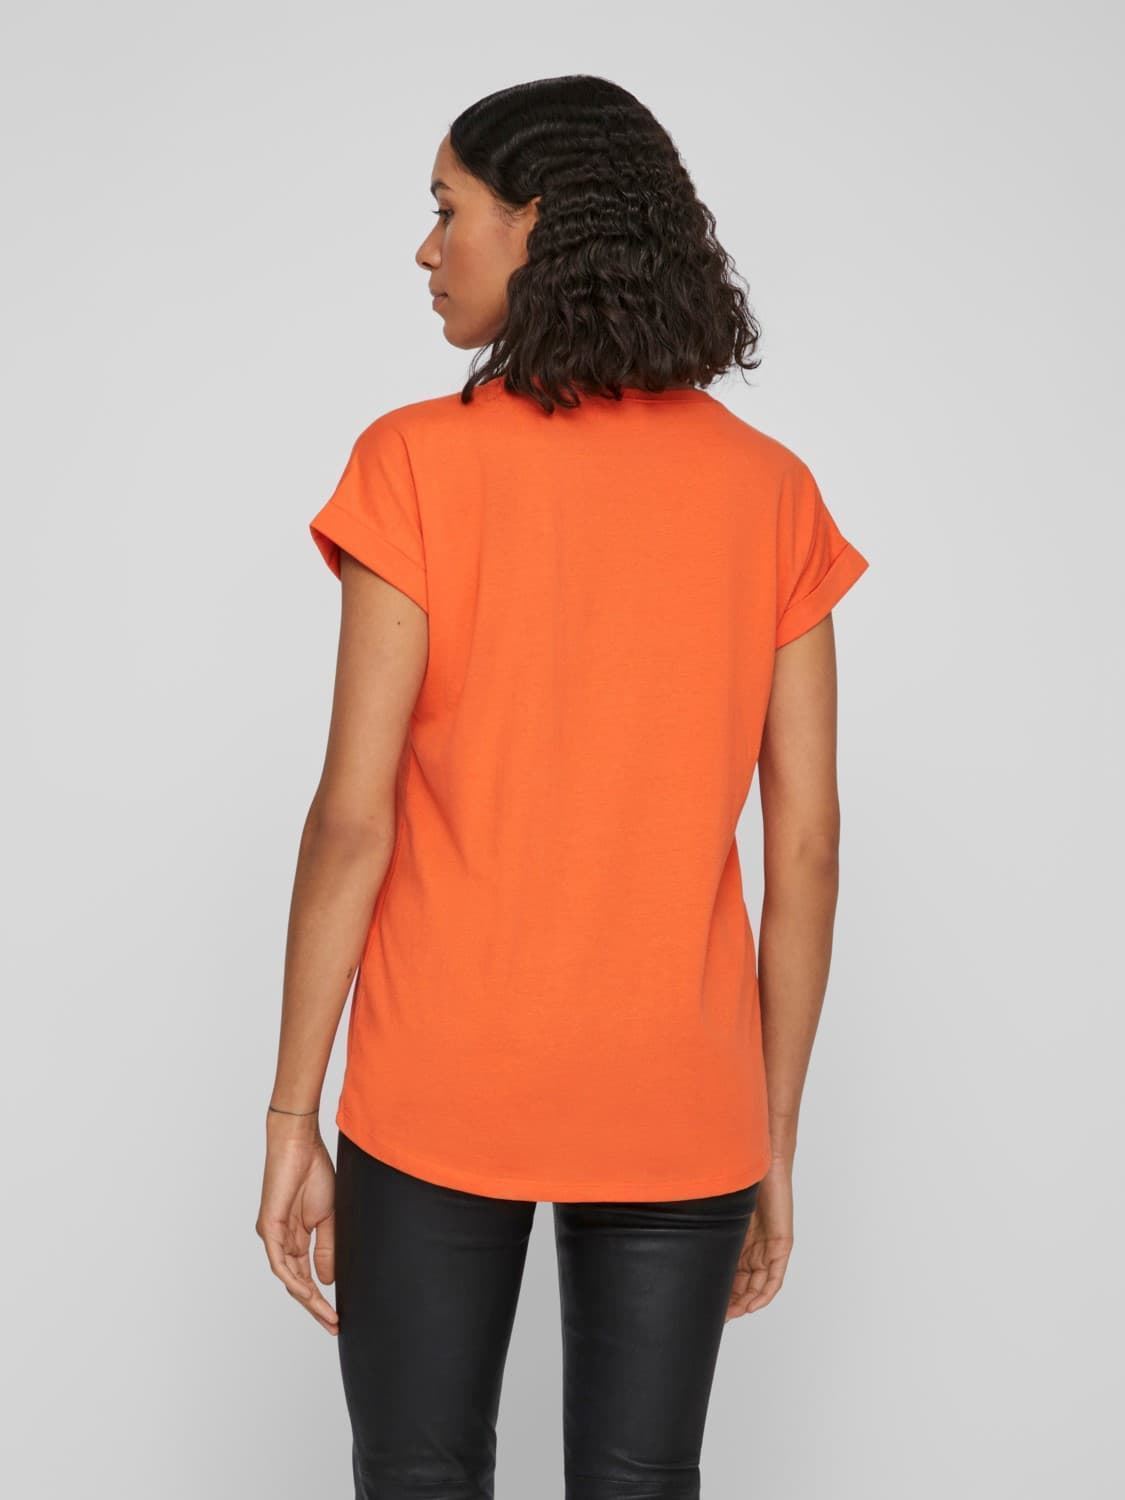 Camiseta naranja vidreamers - Imagen 2